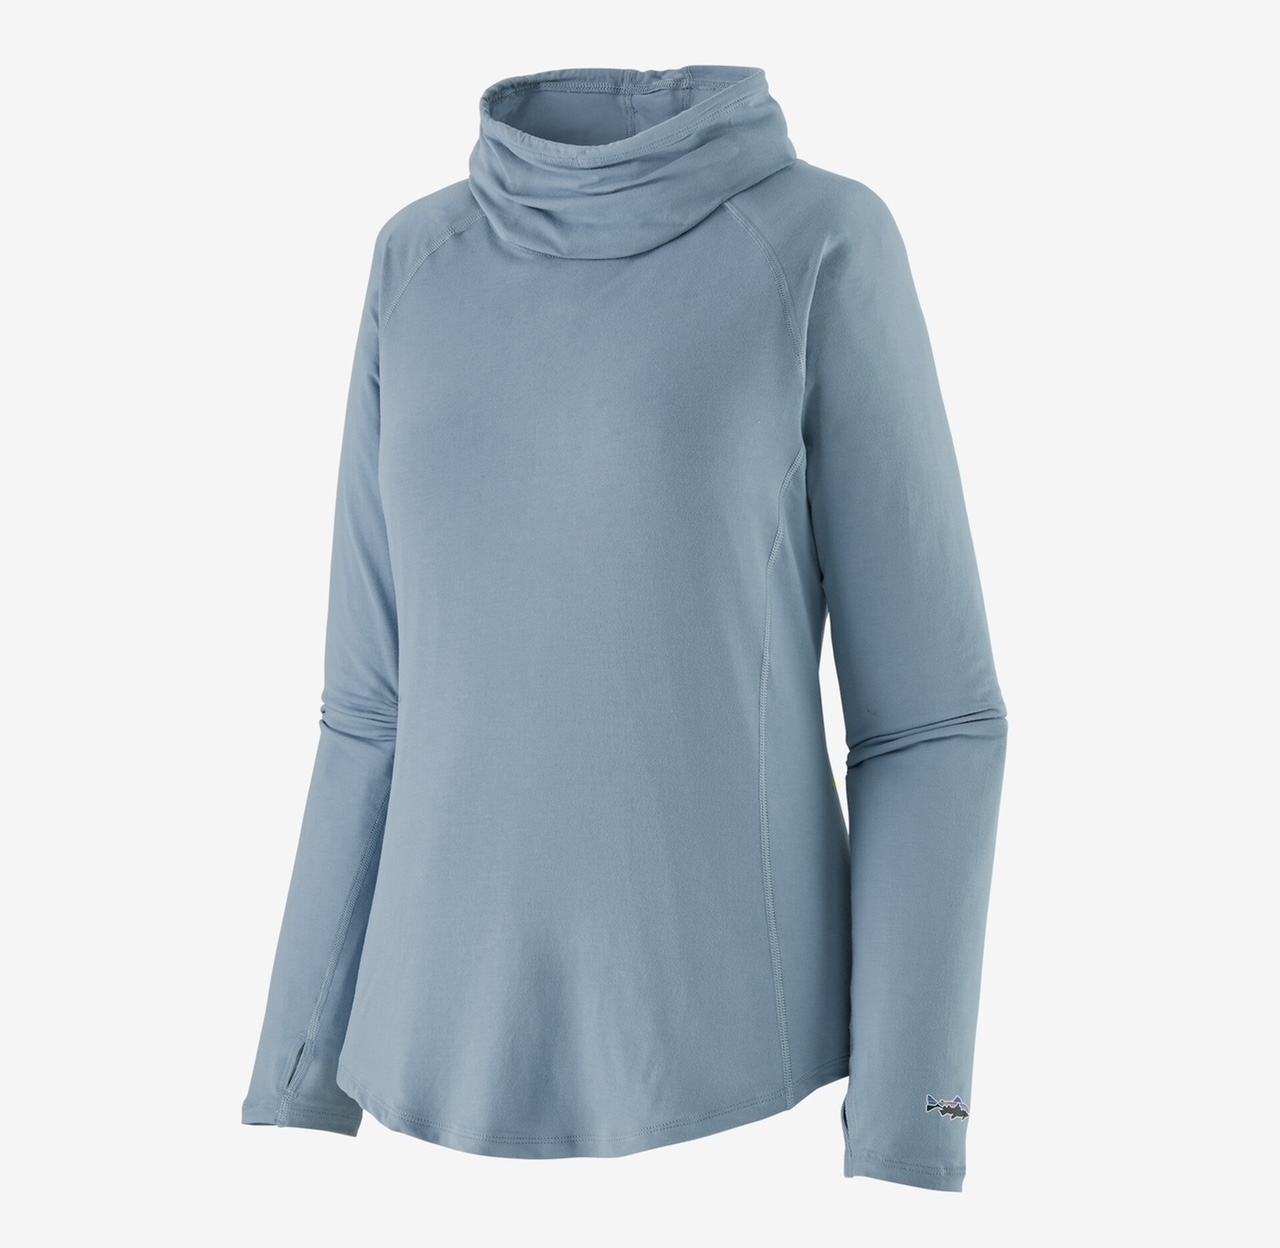 Patagonia W's Tropic Comfort Natural Shirt - Light Plume Grey - Large